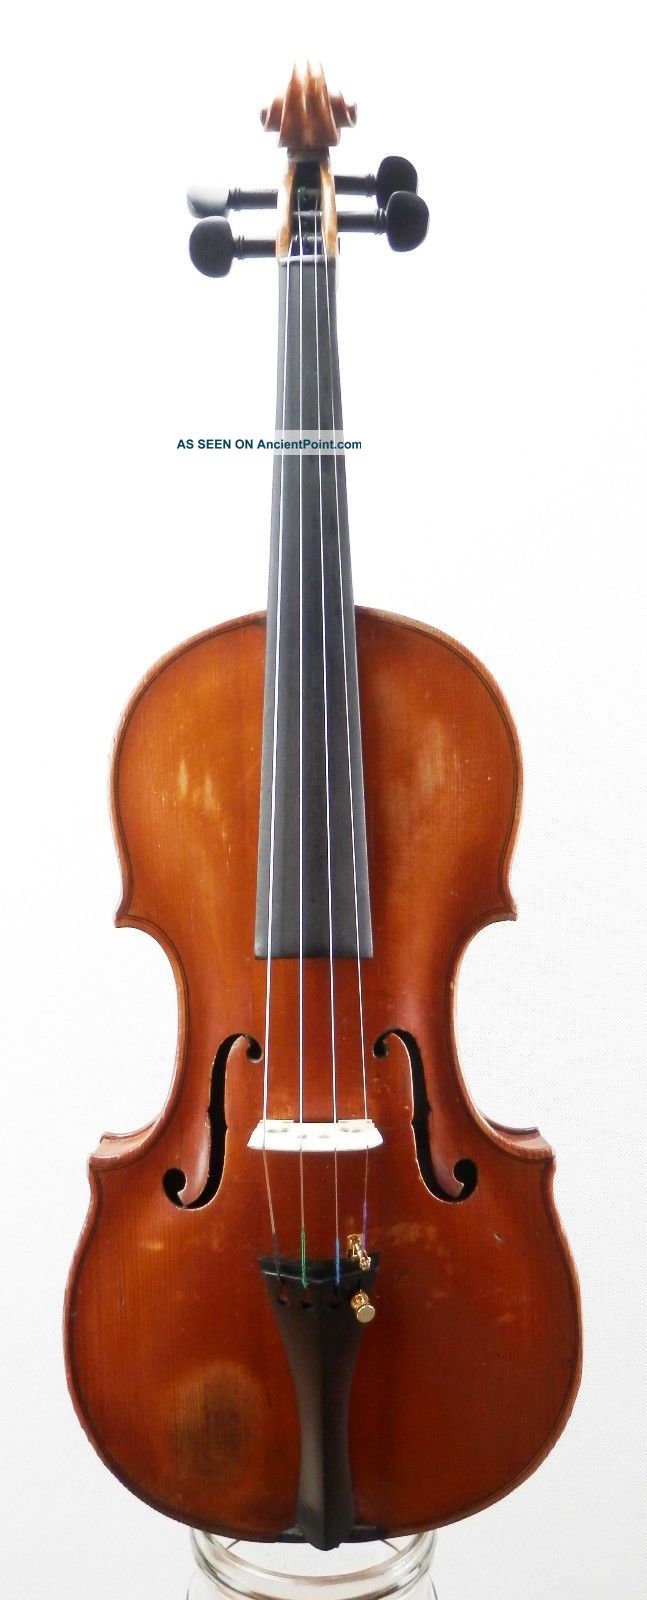 Cajetanus Sgarabotto Old Italian Master Violin Labeled Antique 4/4 String photo